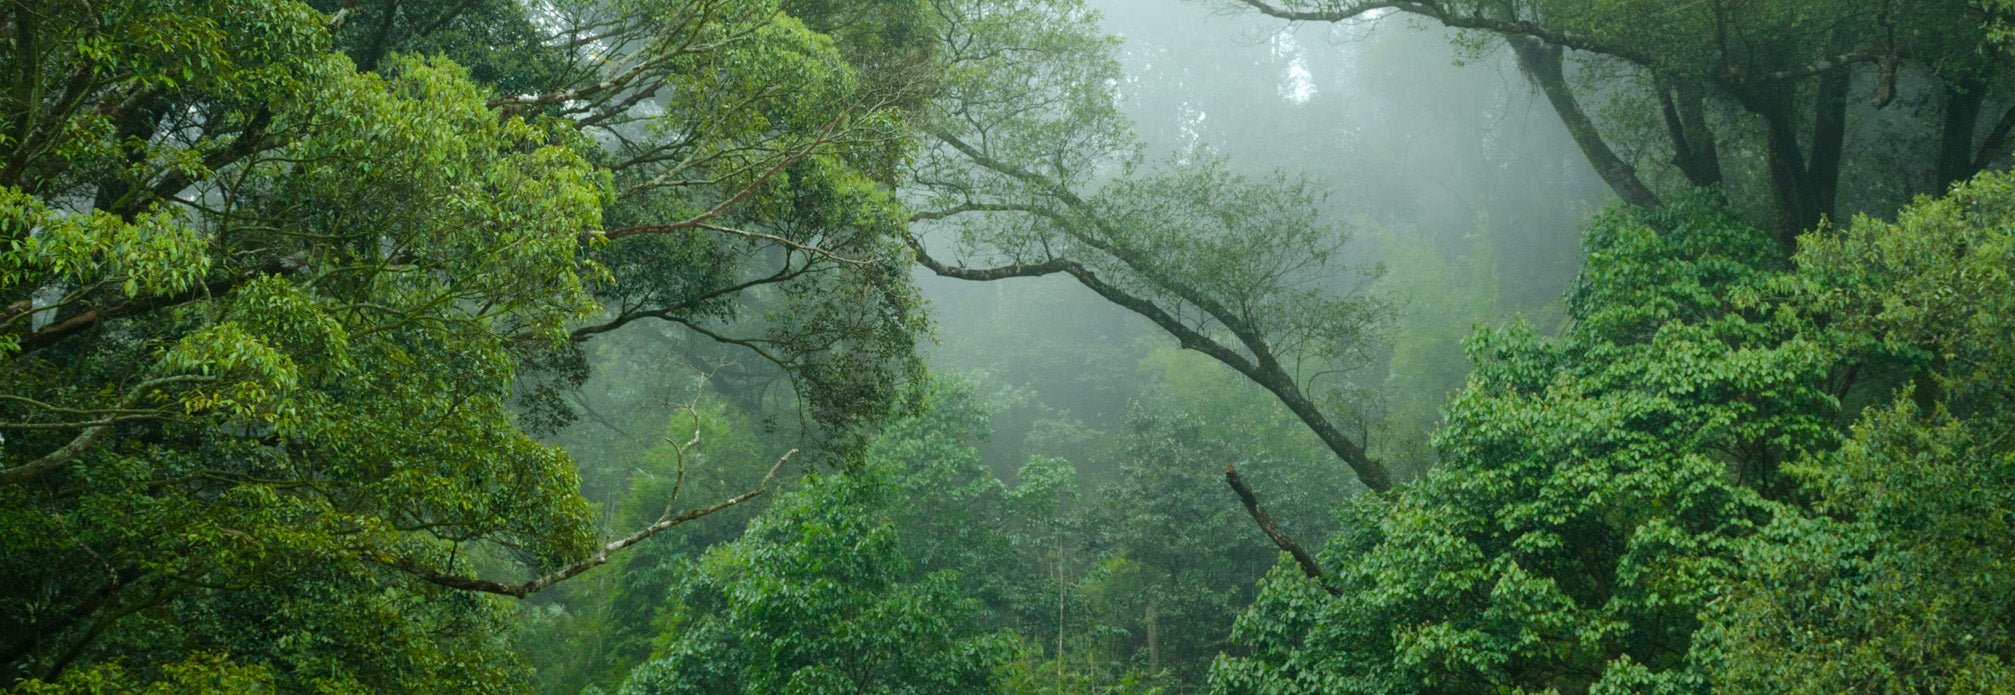 Rainforest Conservation Collection